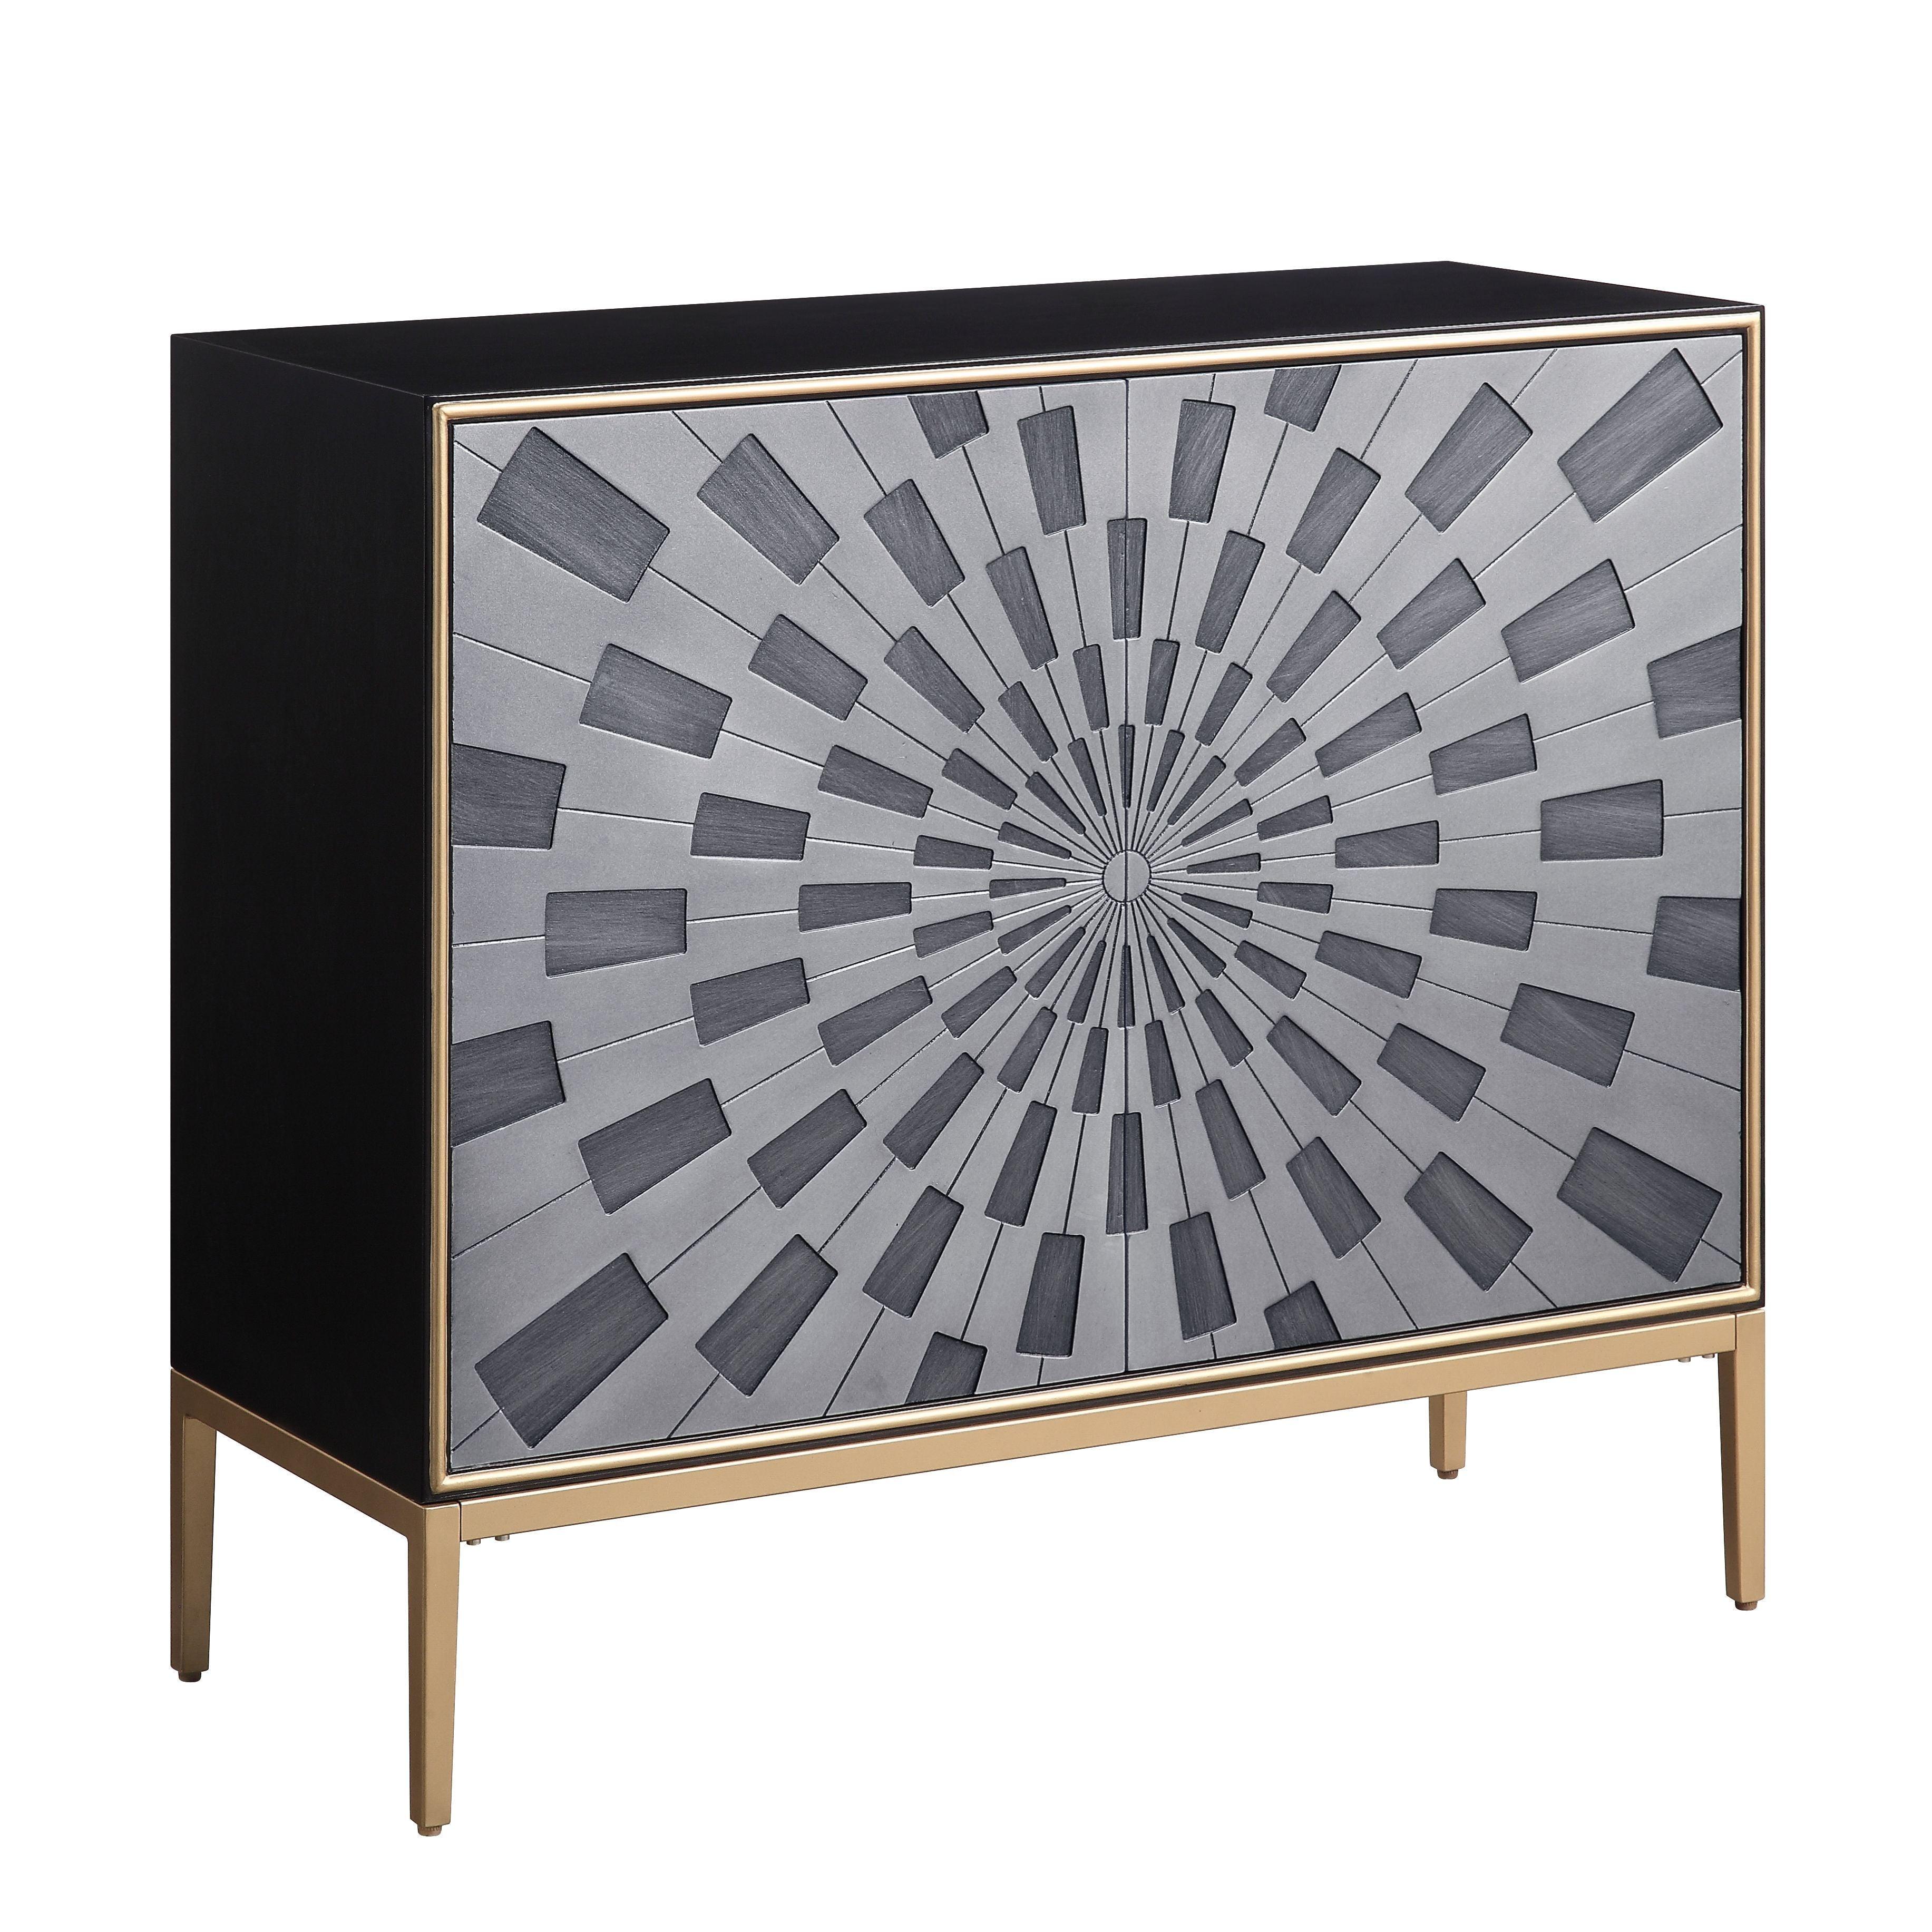 ACME - Quilla - Accent Table - Black, Gray & Brass Finish - 5th Avenue Furniture